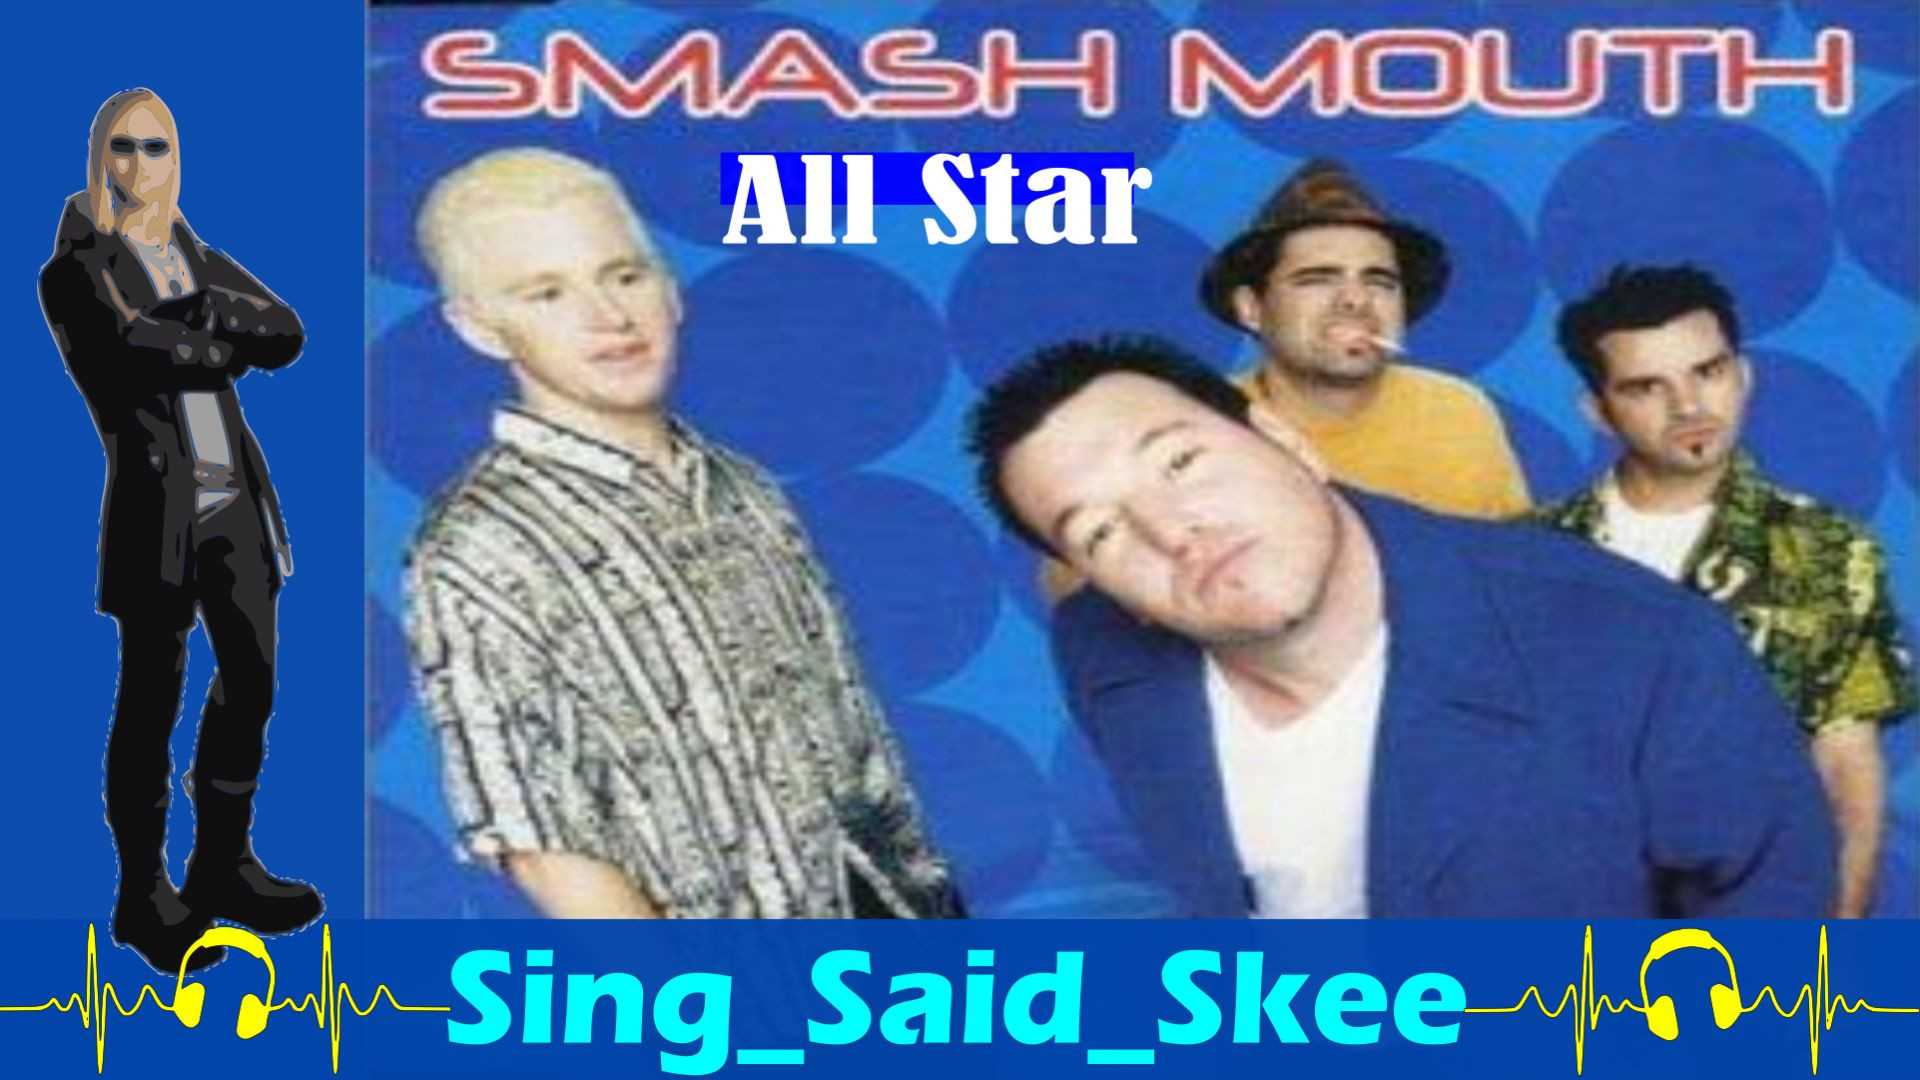 All Star - Smash Mouth - Sing_Said_Skee